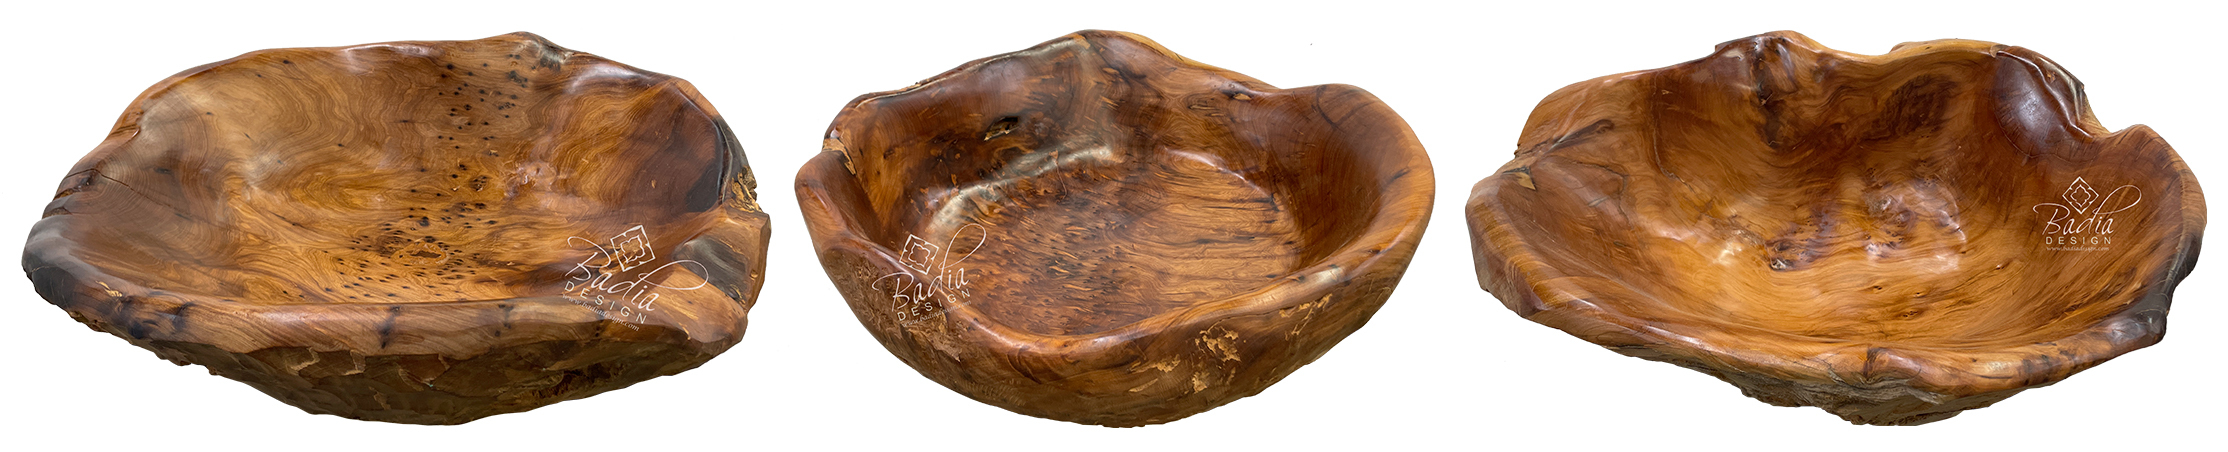 large-moroccan-thuya-wood-bowls-hd330.jpg